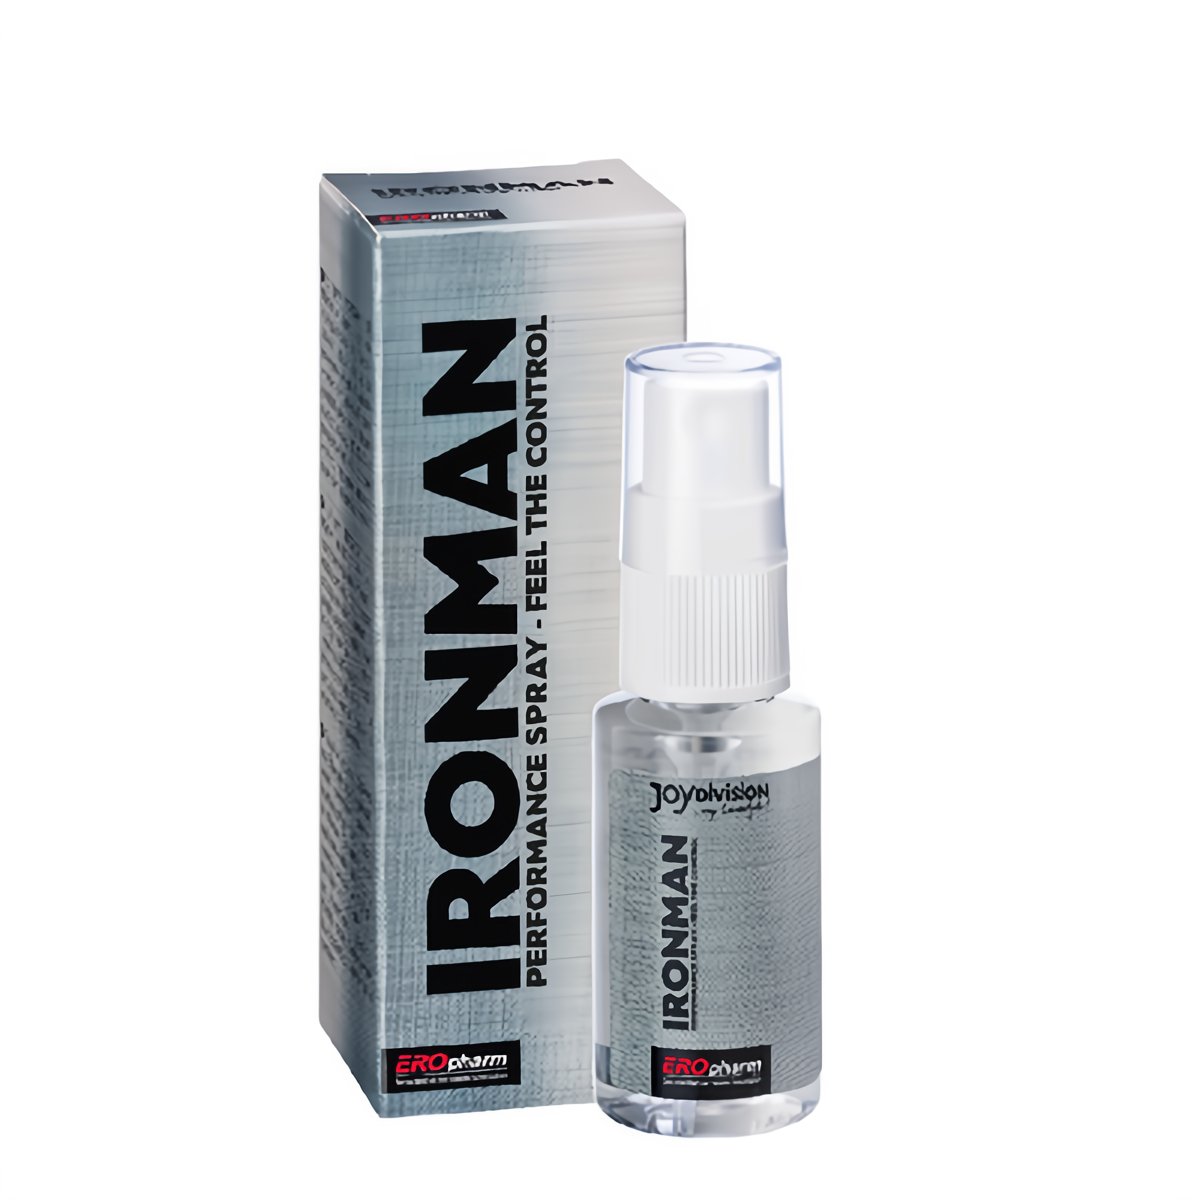 Ironman - 30 ml - EroticToyzProducten,Veilige Seks, Verzorging Hulp,Stimulerende Middelen,Stimulerende Lotions en Gels,,MannelijkJoydivision